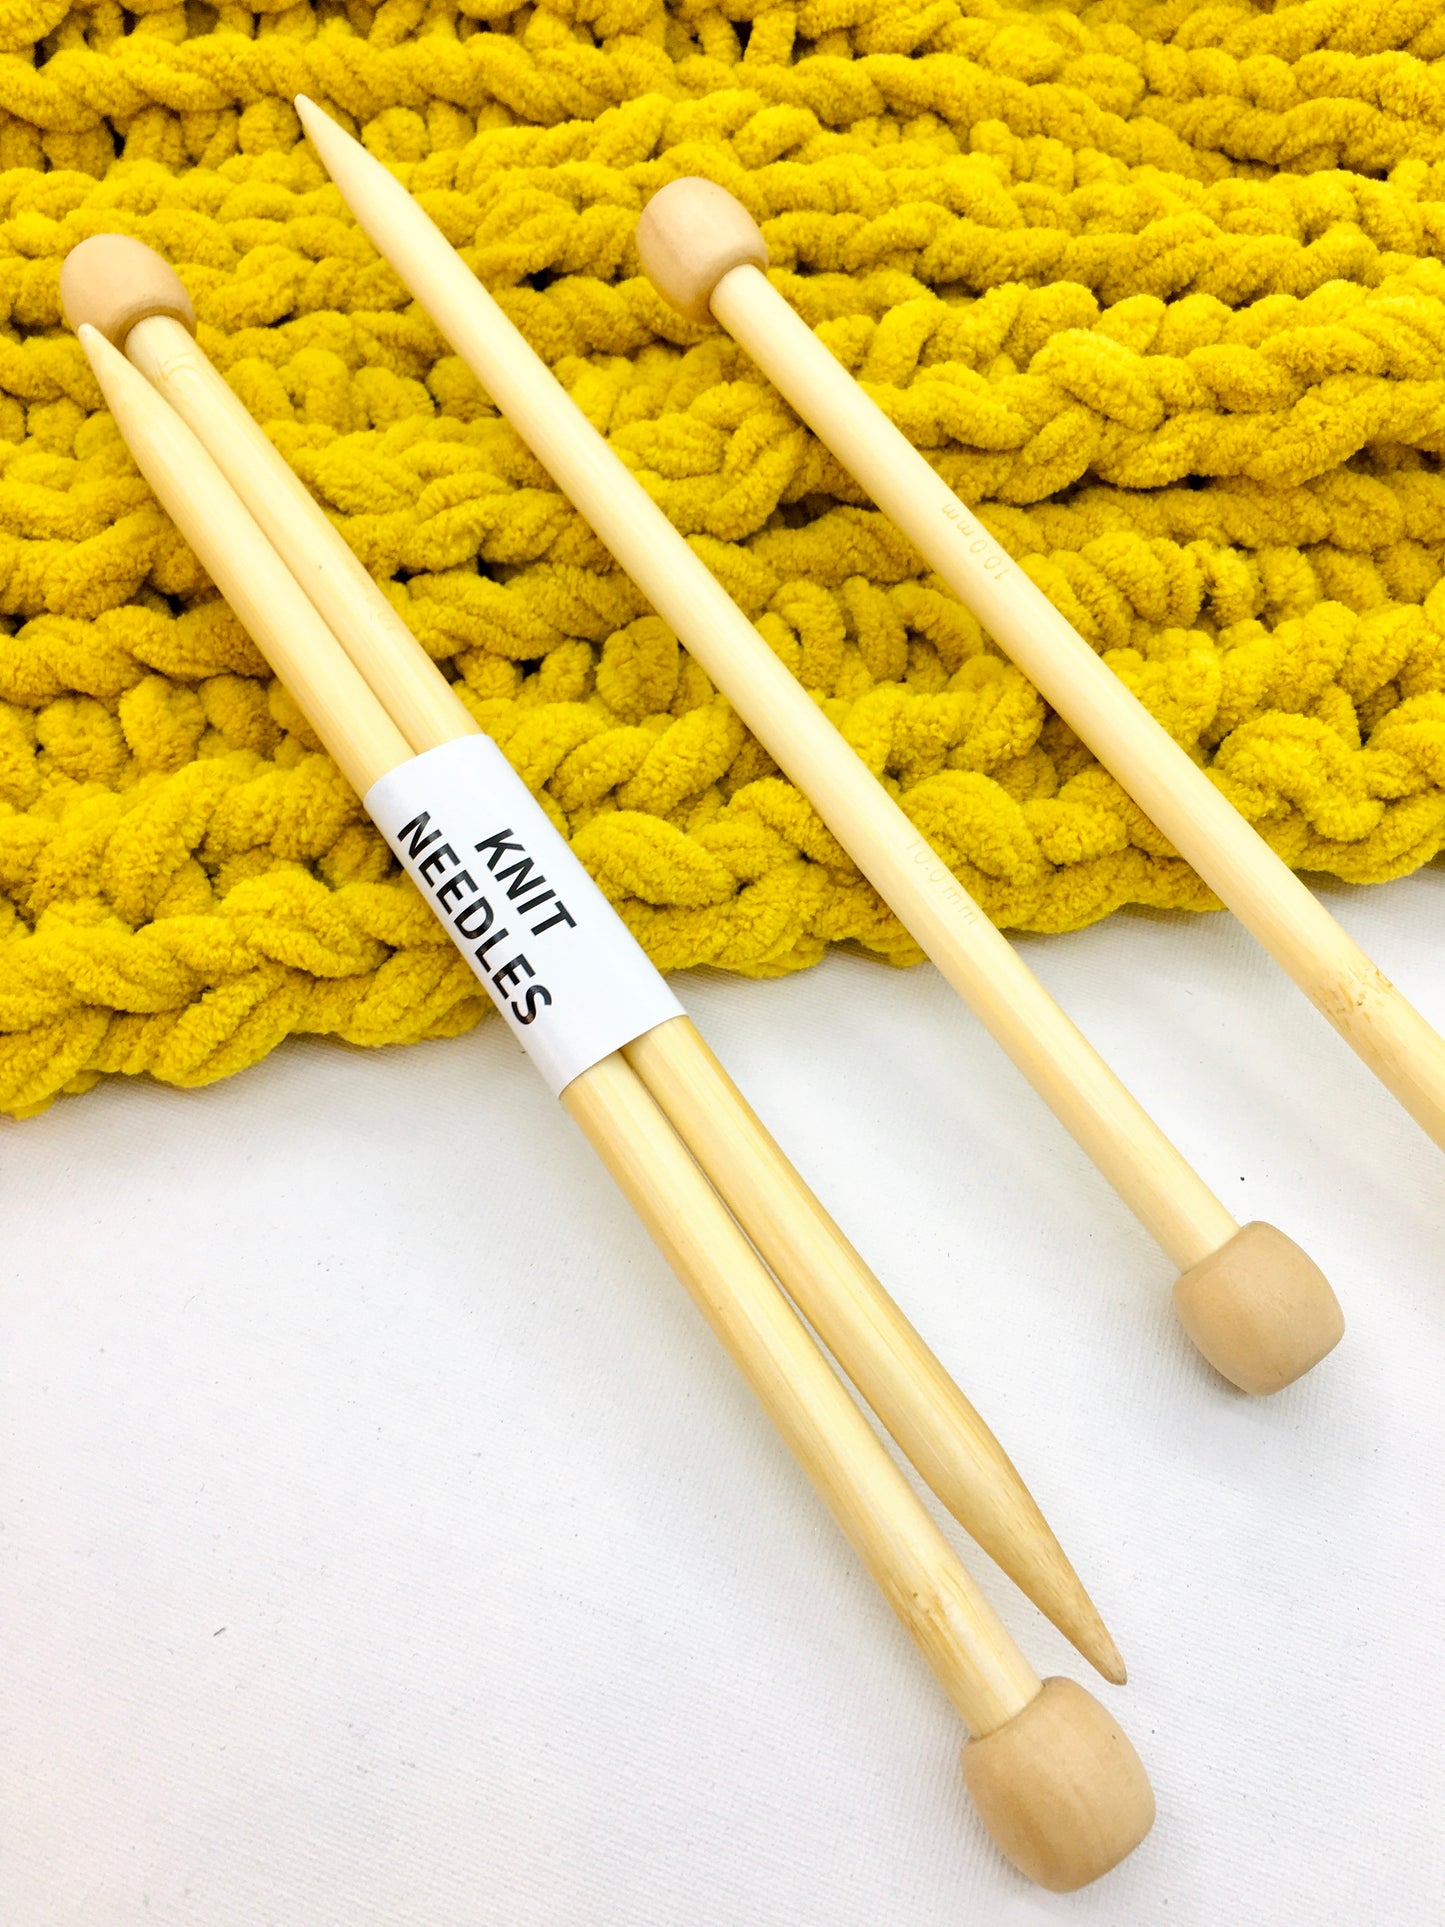 10mm short knitting needles